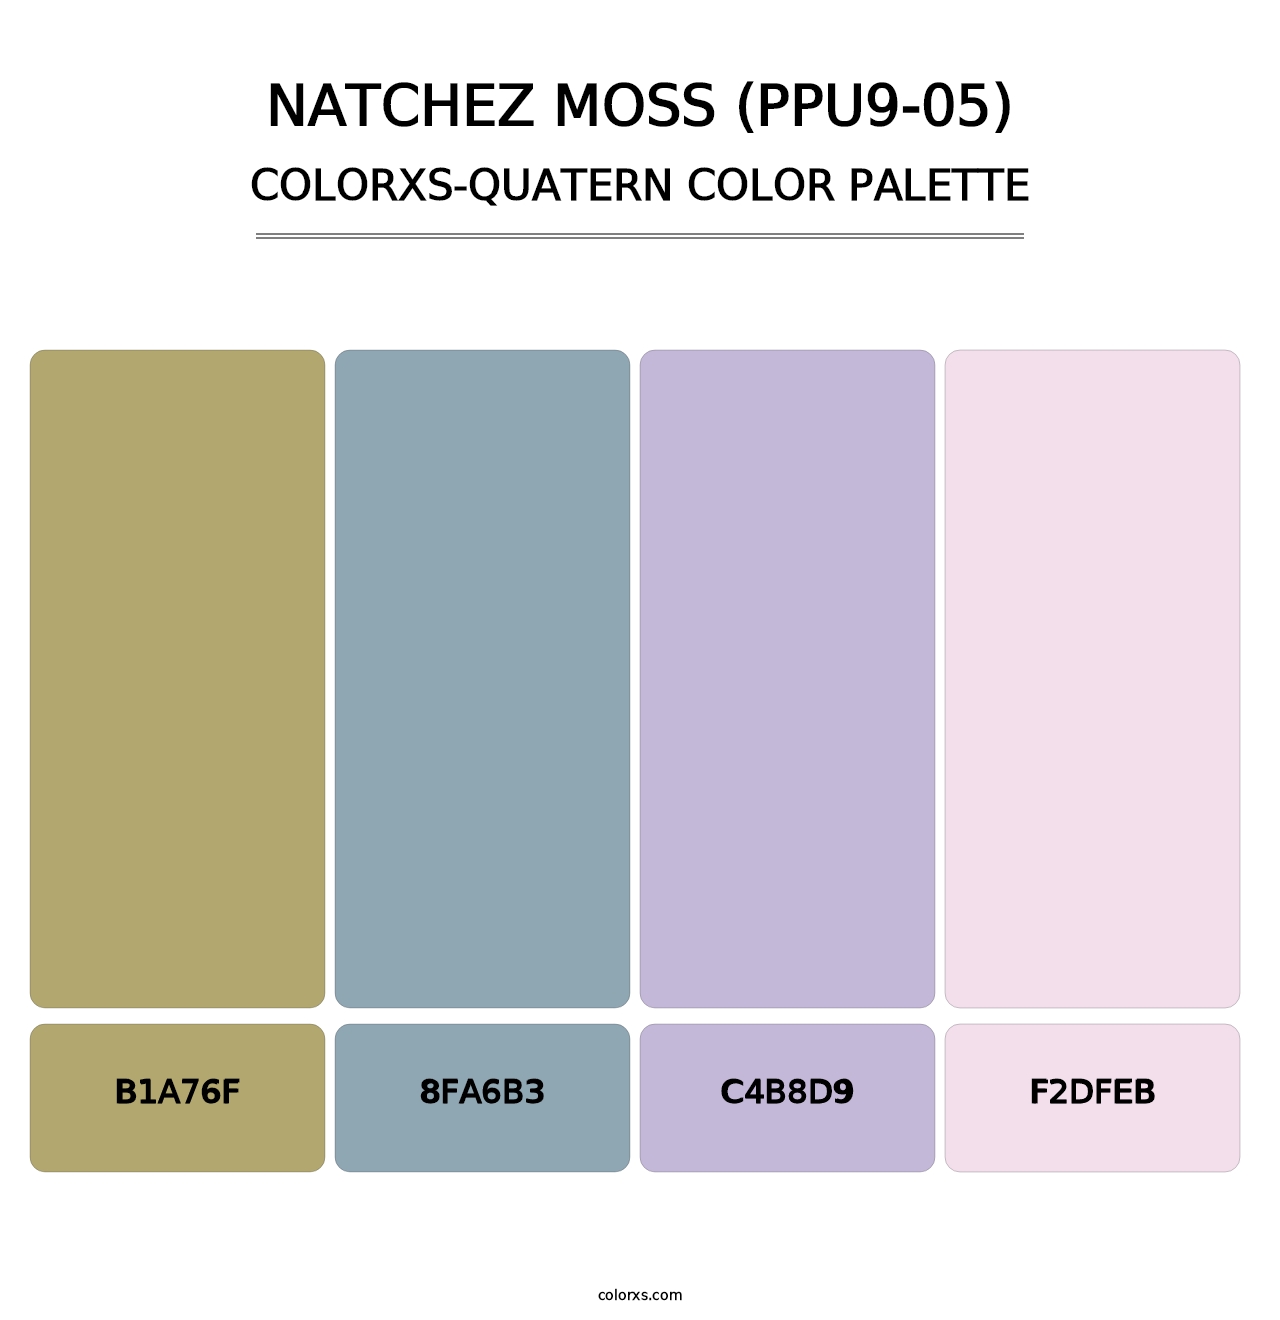 Natchez Moss (PPU9-05) - Colorxs Quatern Palette